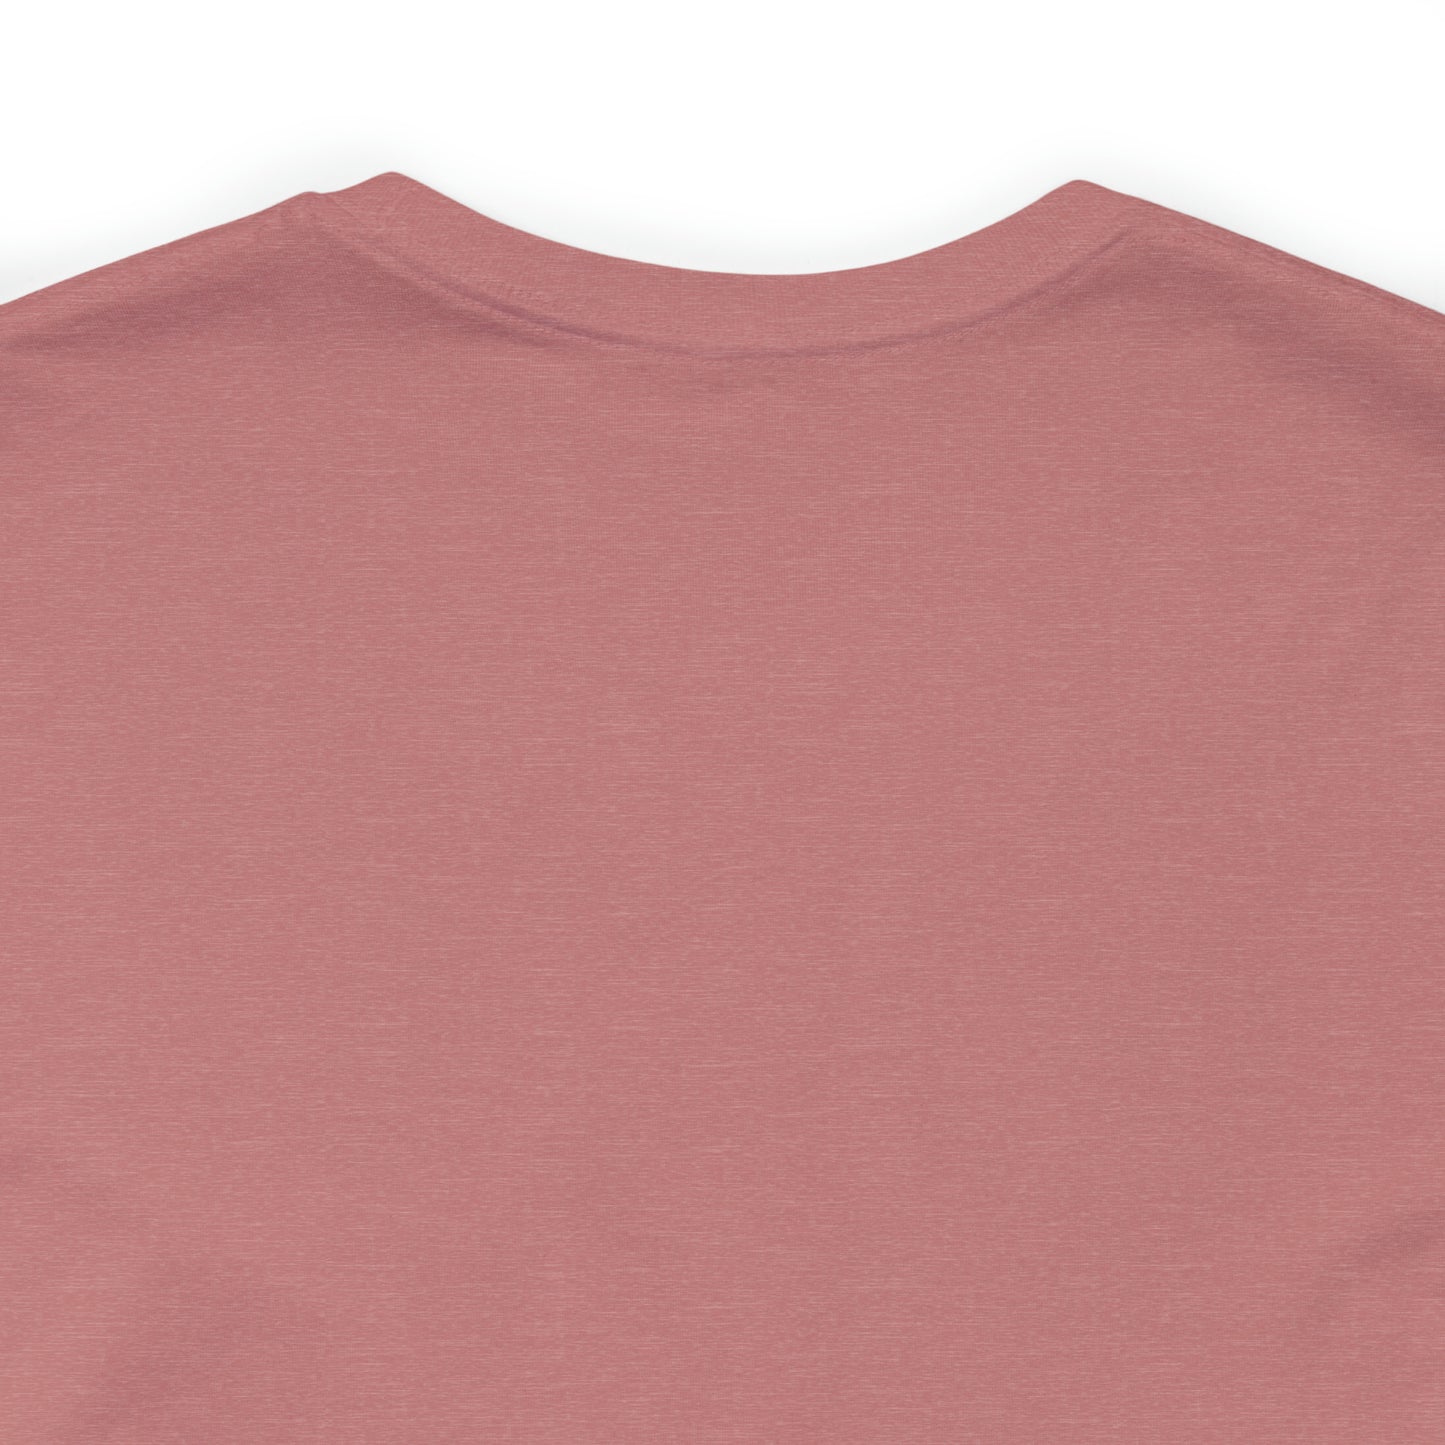 MLEM Cat Jersey Short Sleeve Tee T-Shirt Printify   